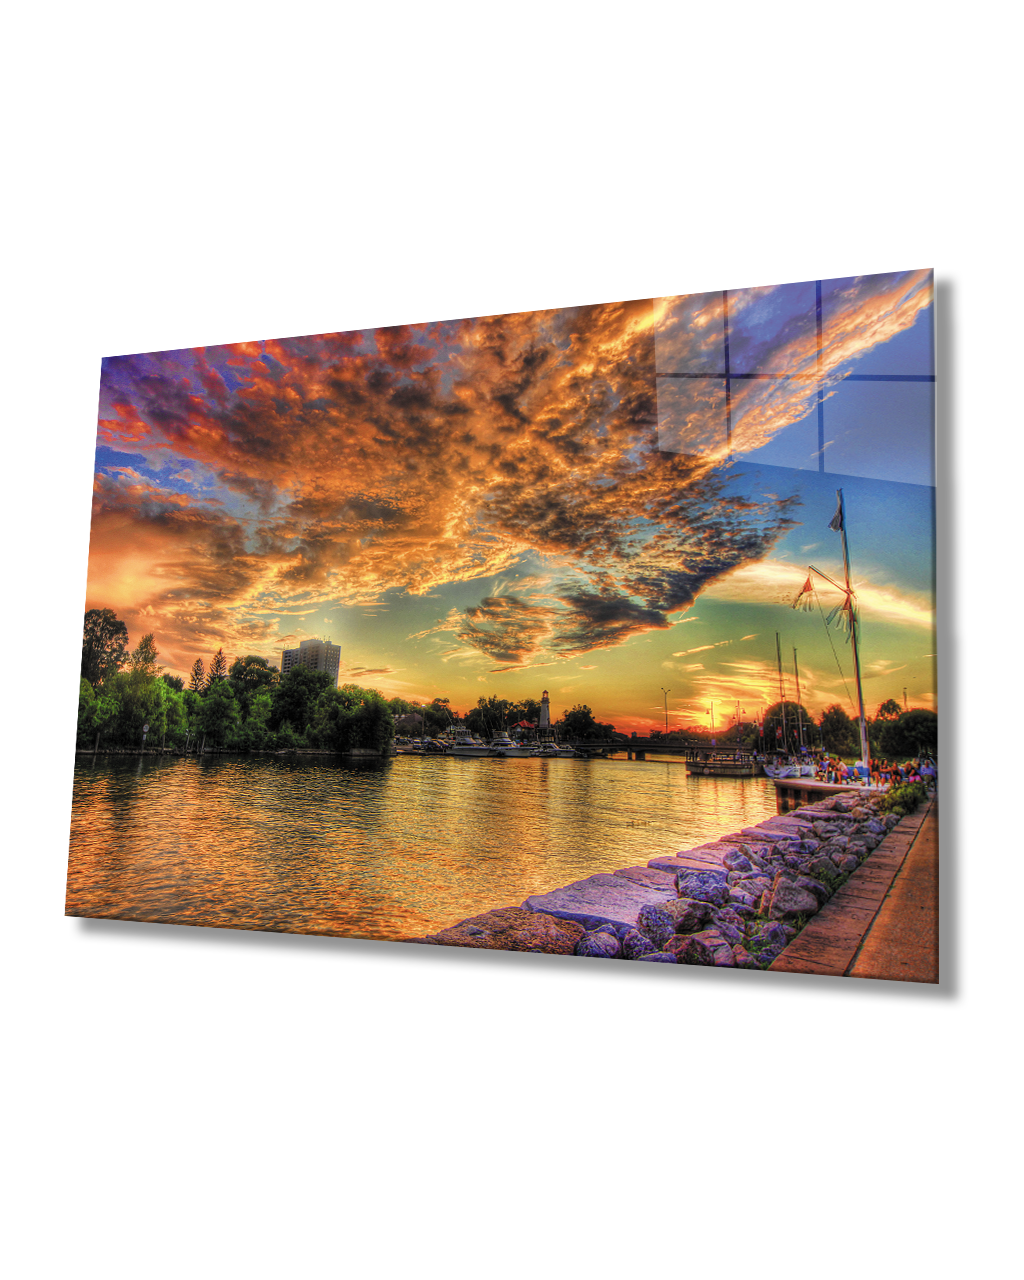 Gün Batımında Şehir Manzarası Cam Tablo City View At Sunset Glass Painting 4mm Durable Tempered Glass4mm Dayanıklı Temperli Cam